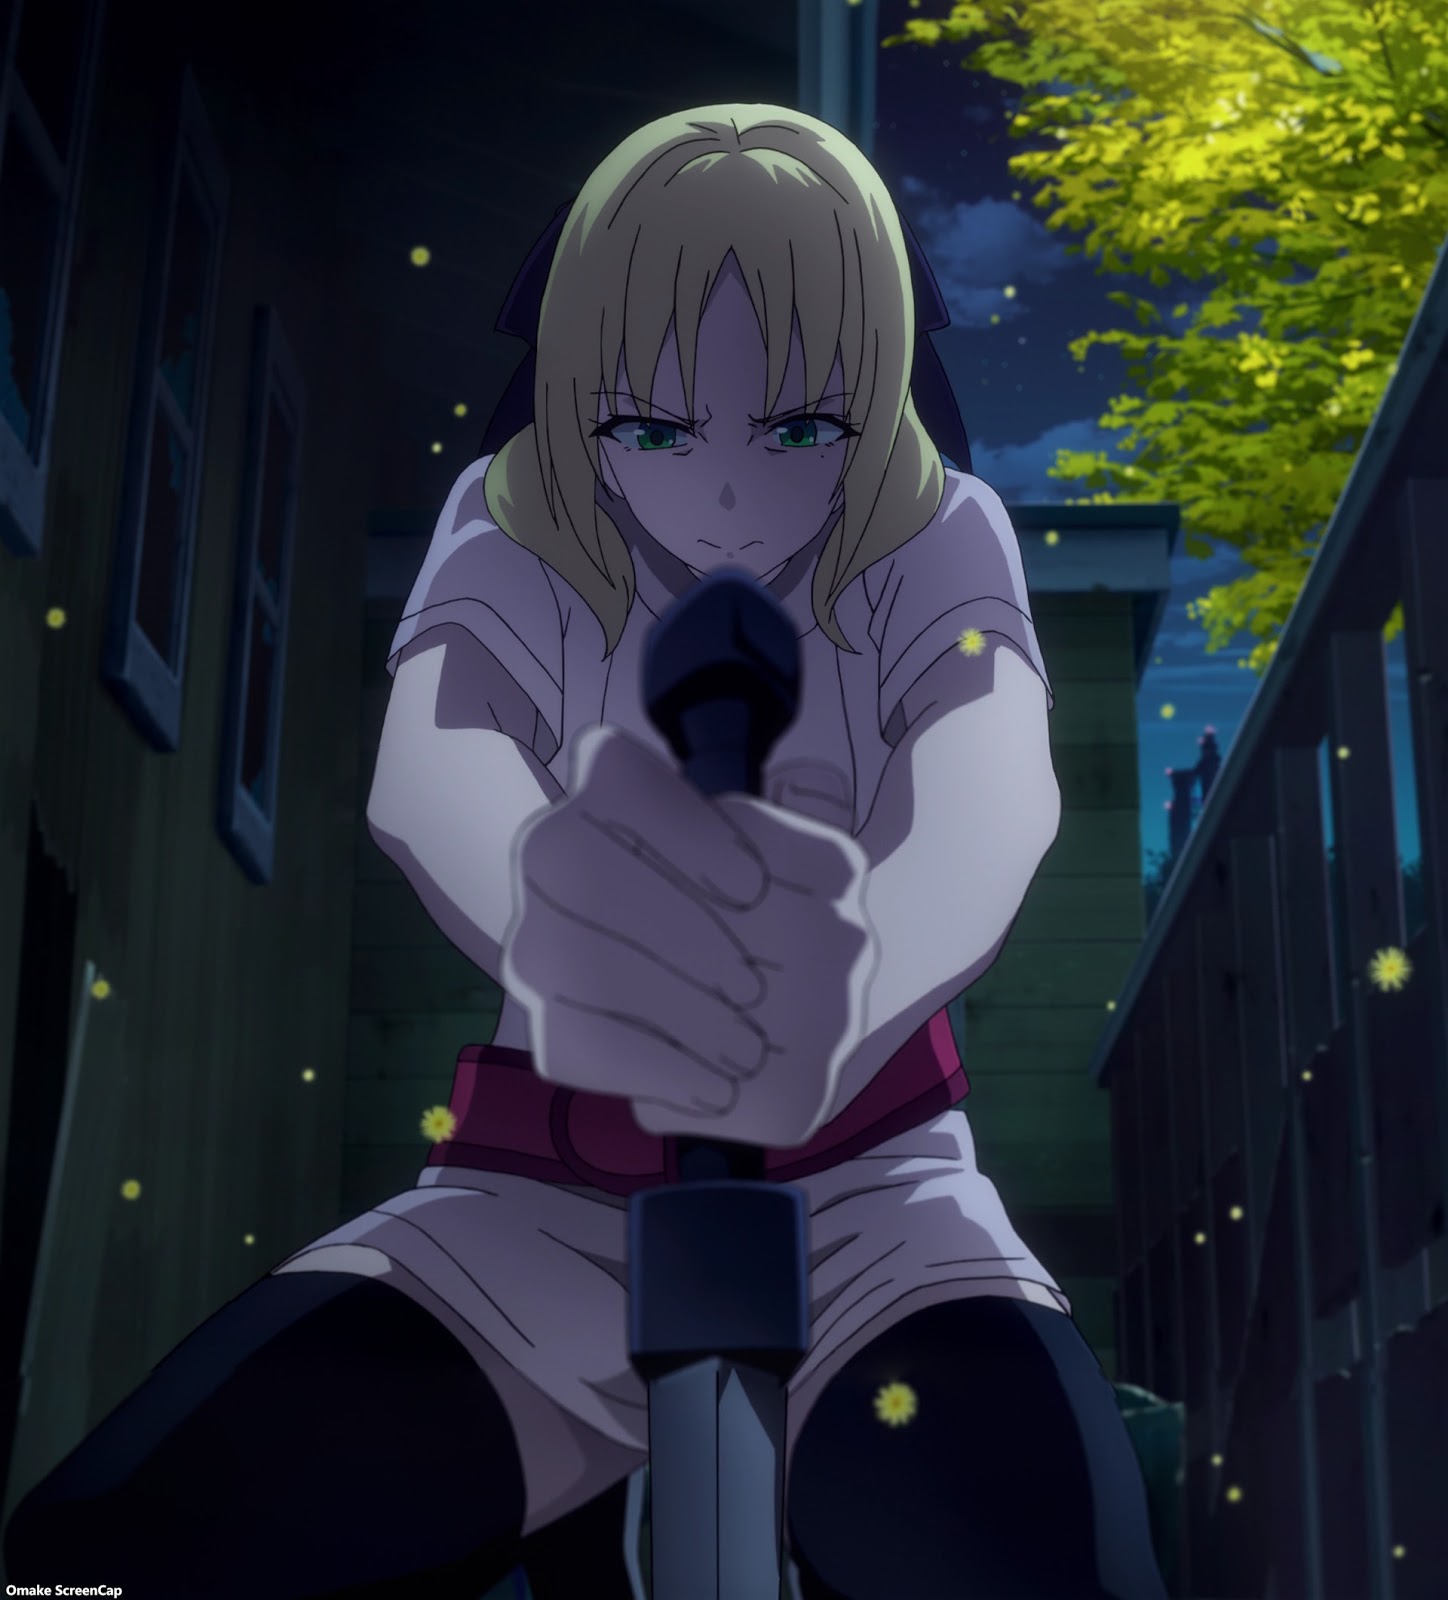 Joeschmo's Gears and Grounds: 10 Second Anime - Toaru Kagaku no Accelerator  - Episode 3